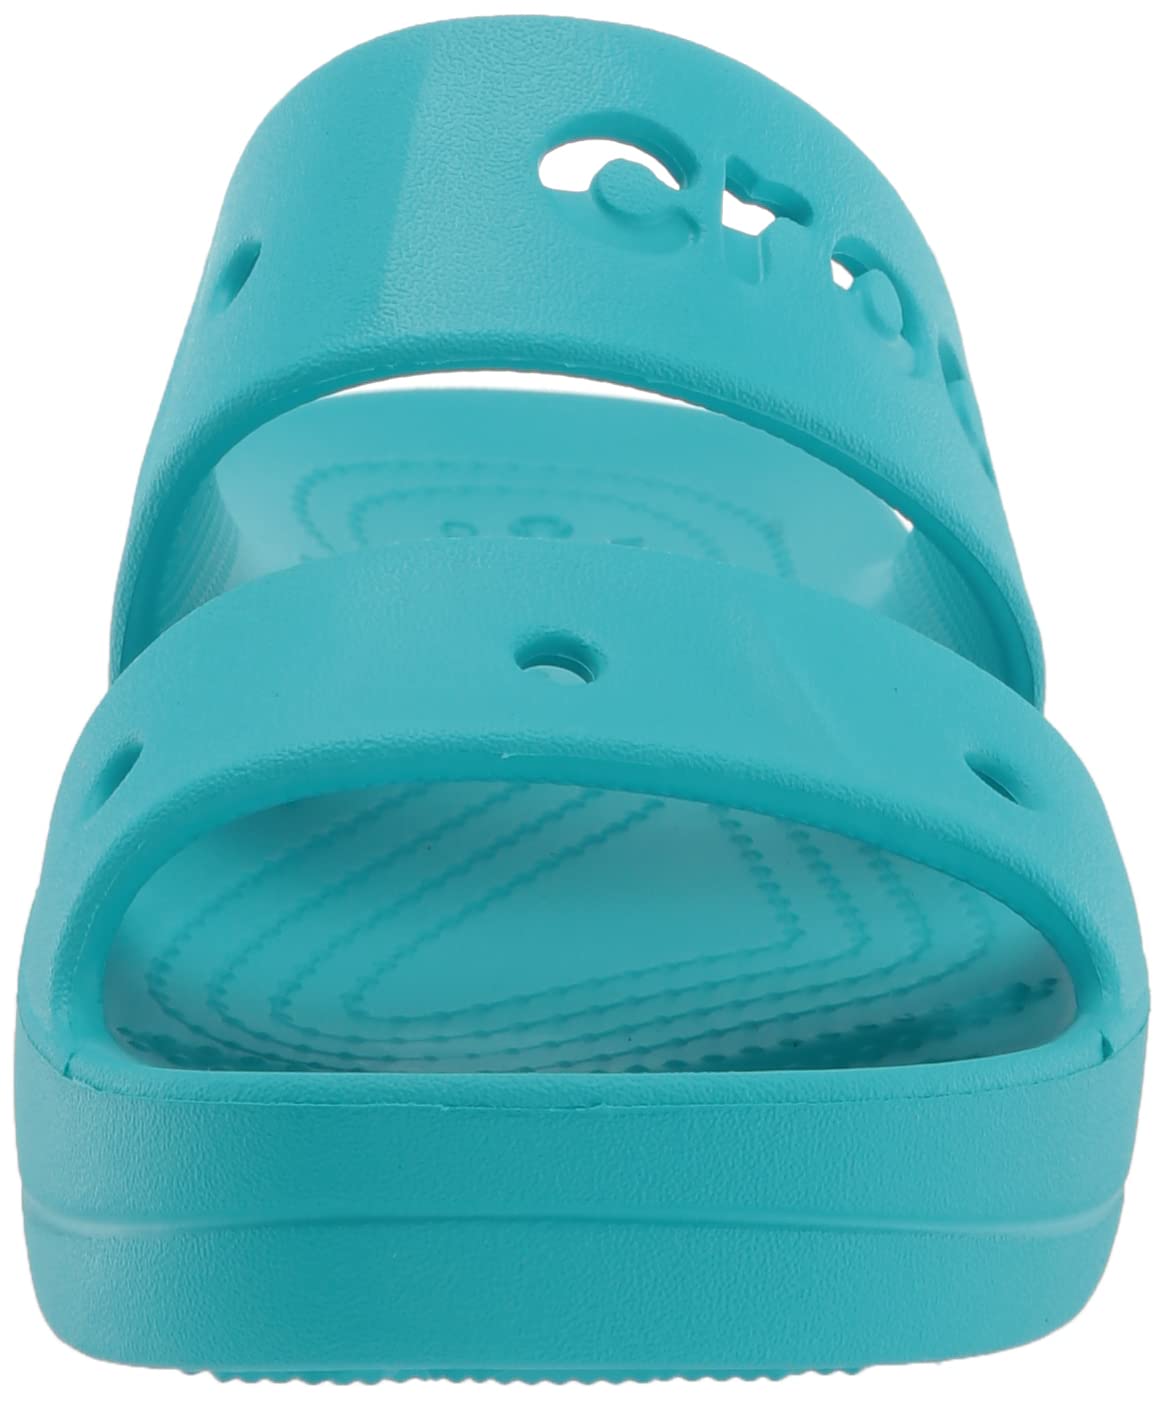 Crocs Women's Baya Platform Sandal